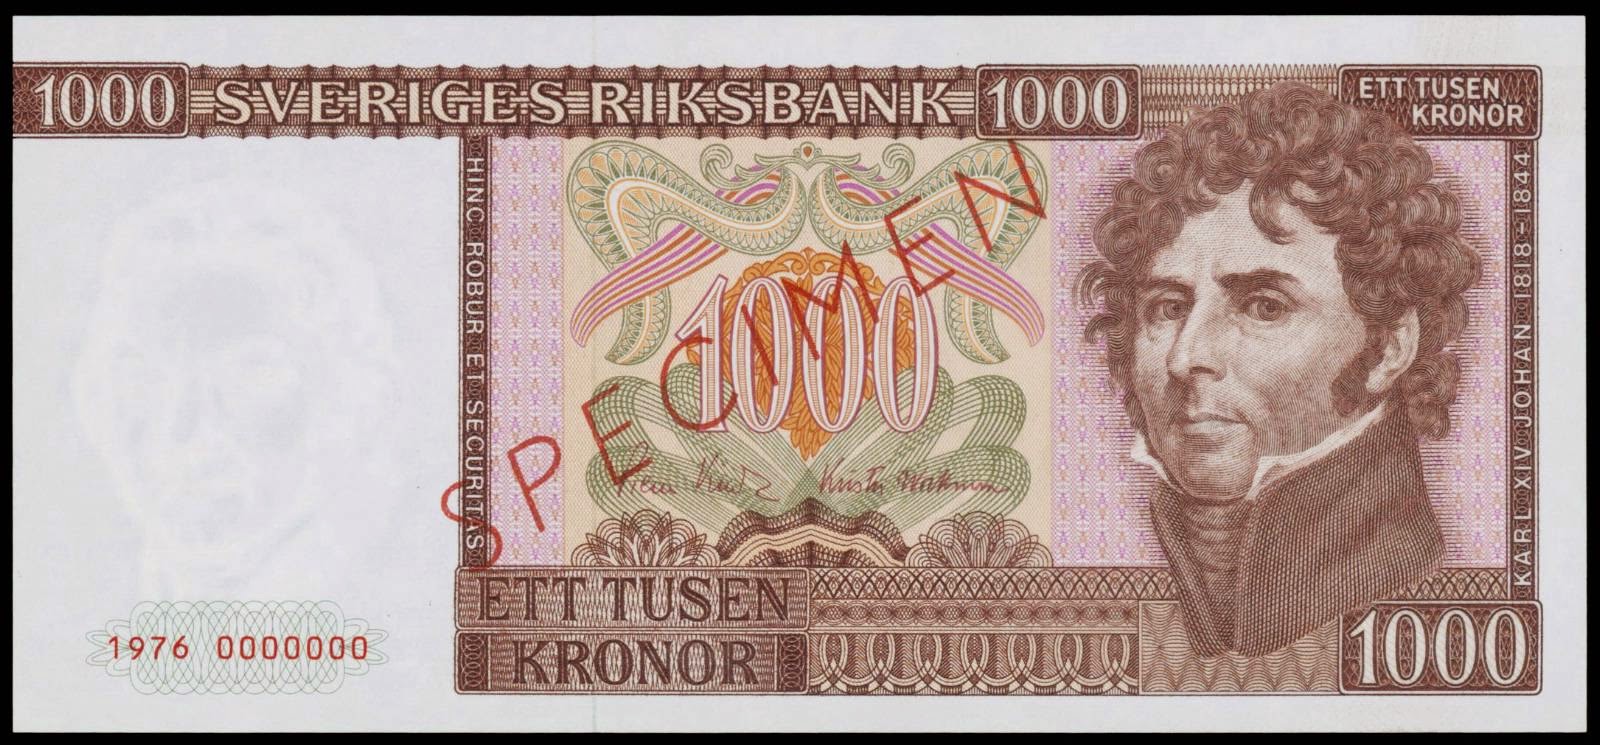 Sweden banknotes 1000 Kronor note King Charles XIV John, Bernadotte